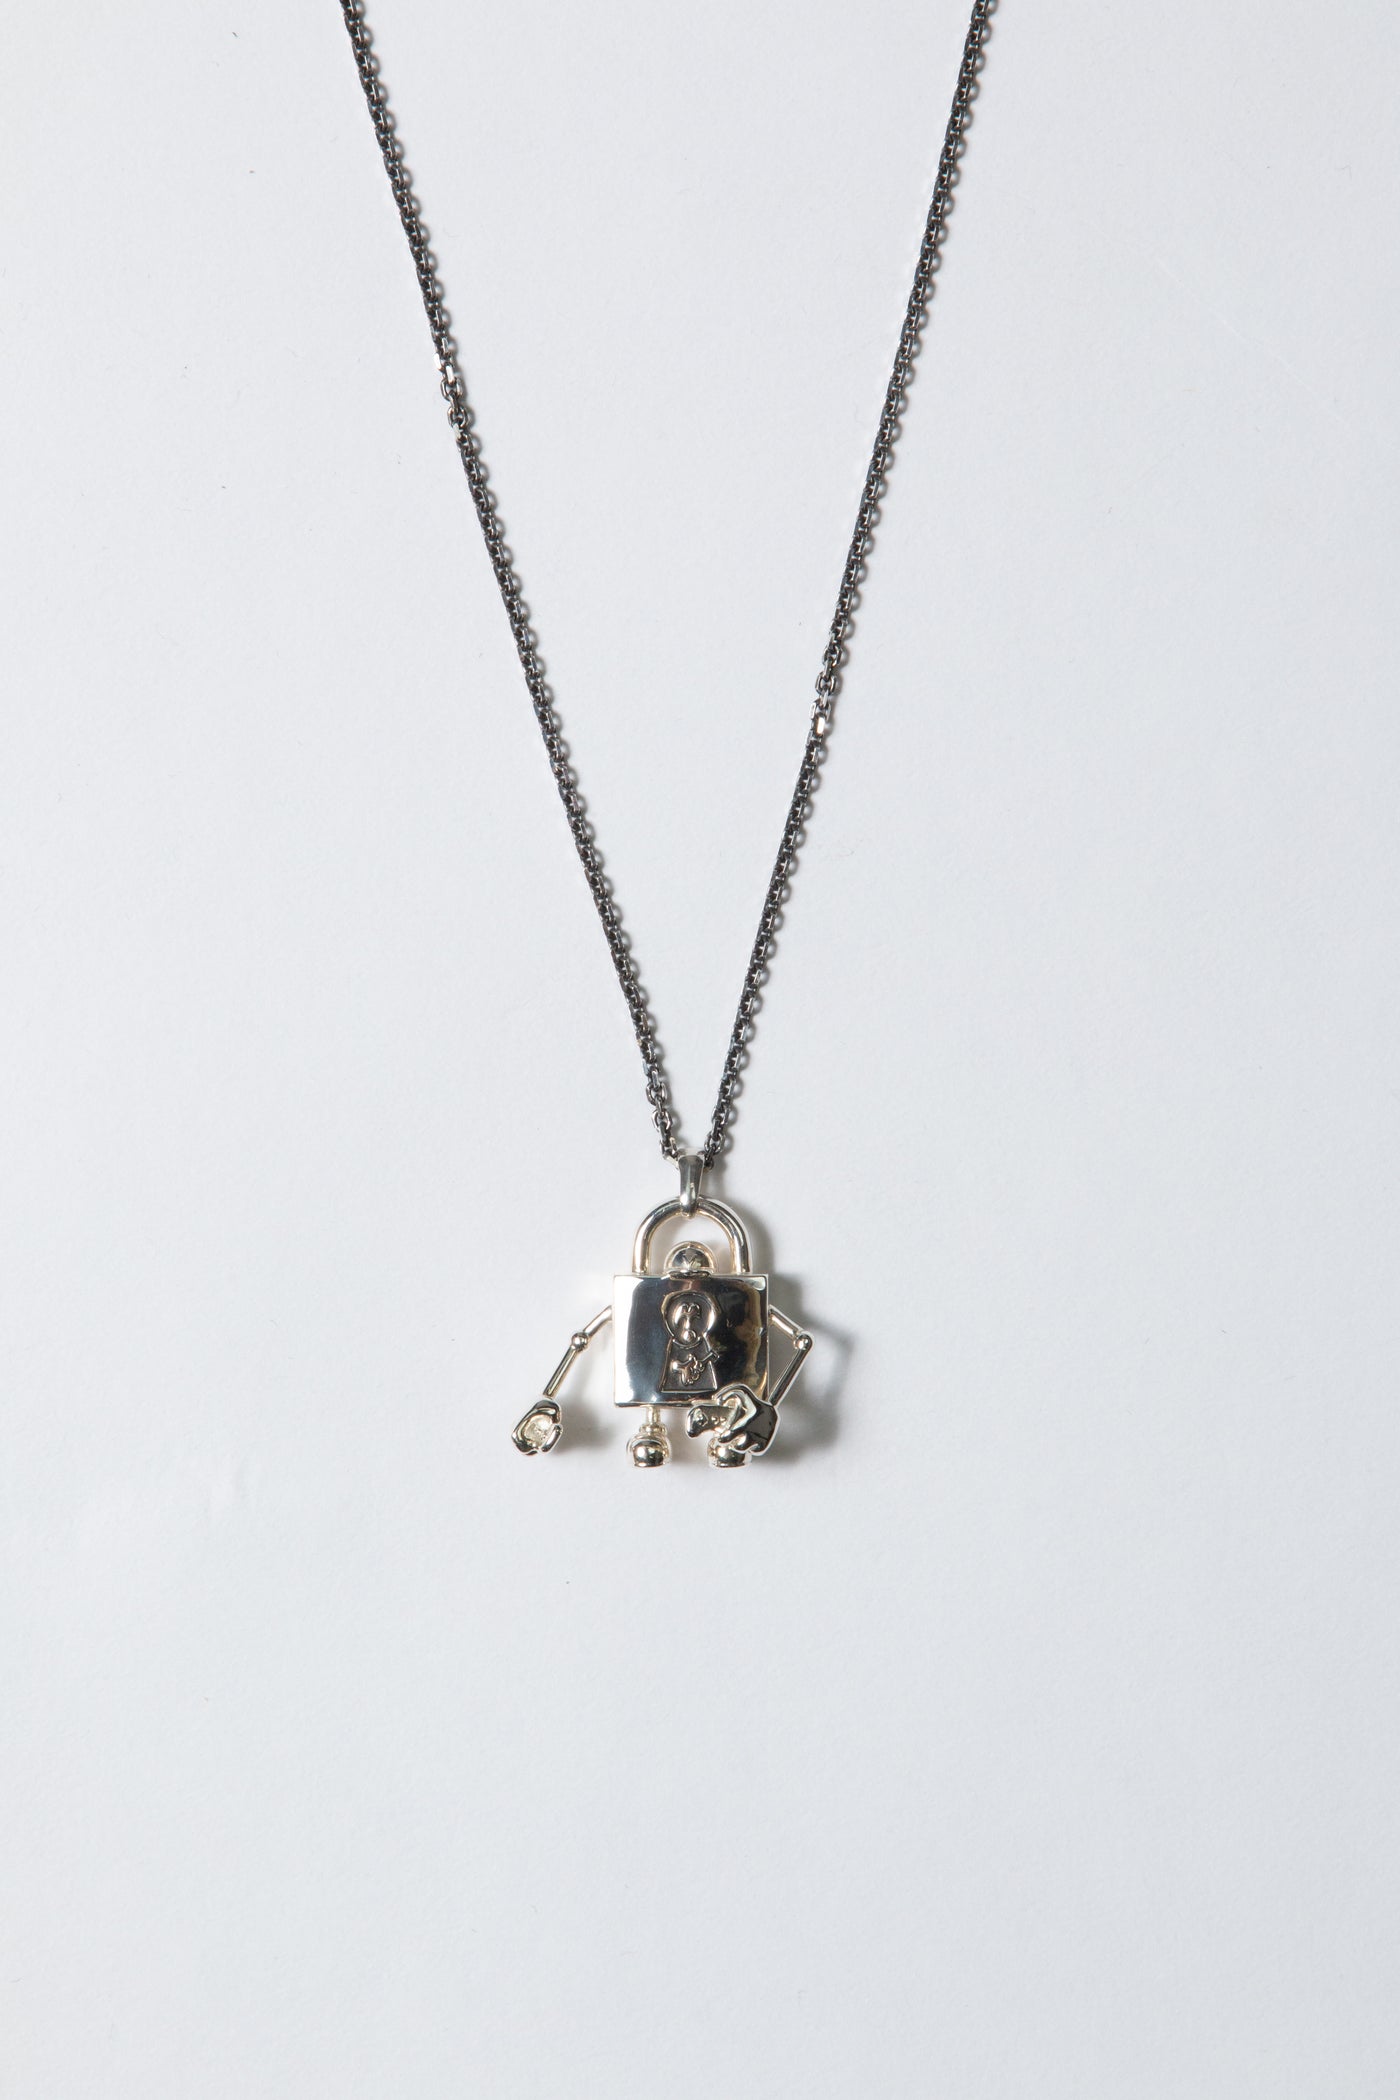 vaultroom key necklace “V” ネックレス - ネックレス